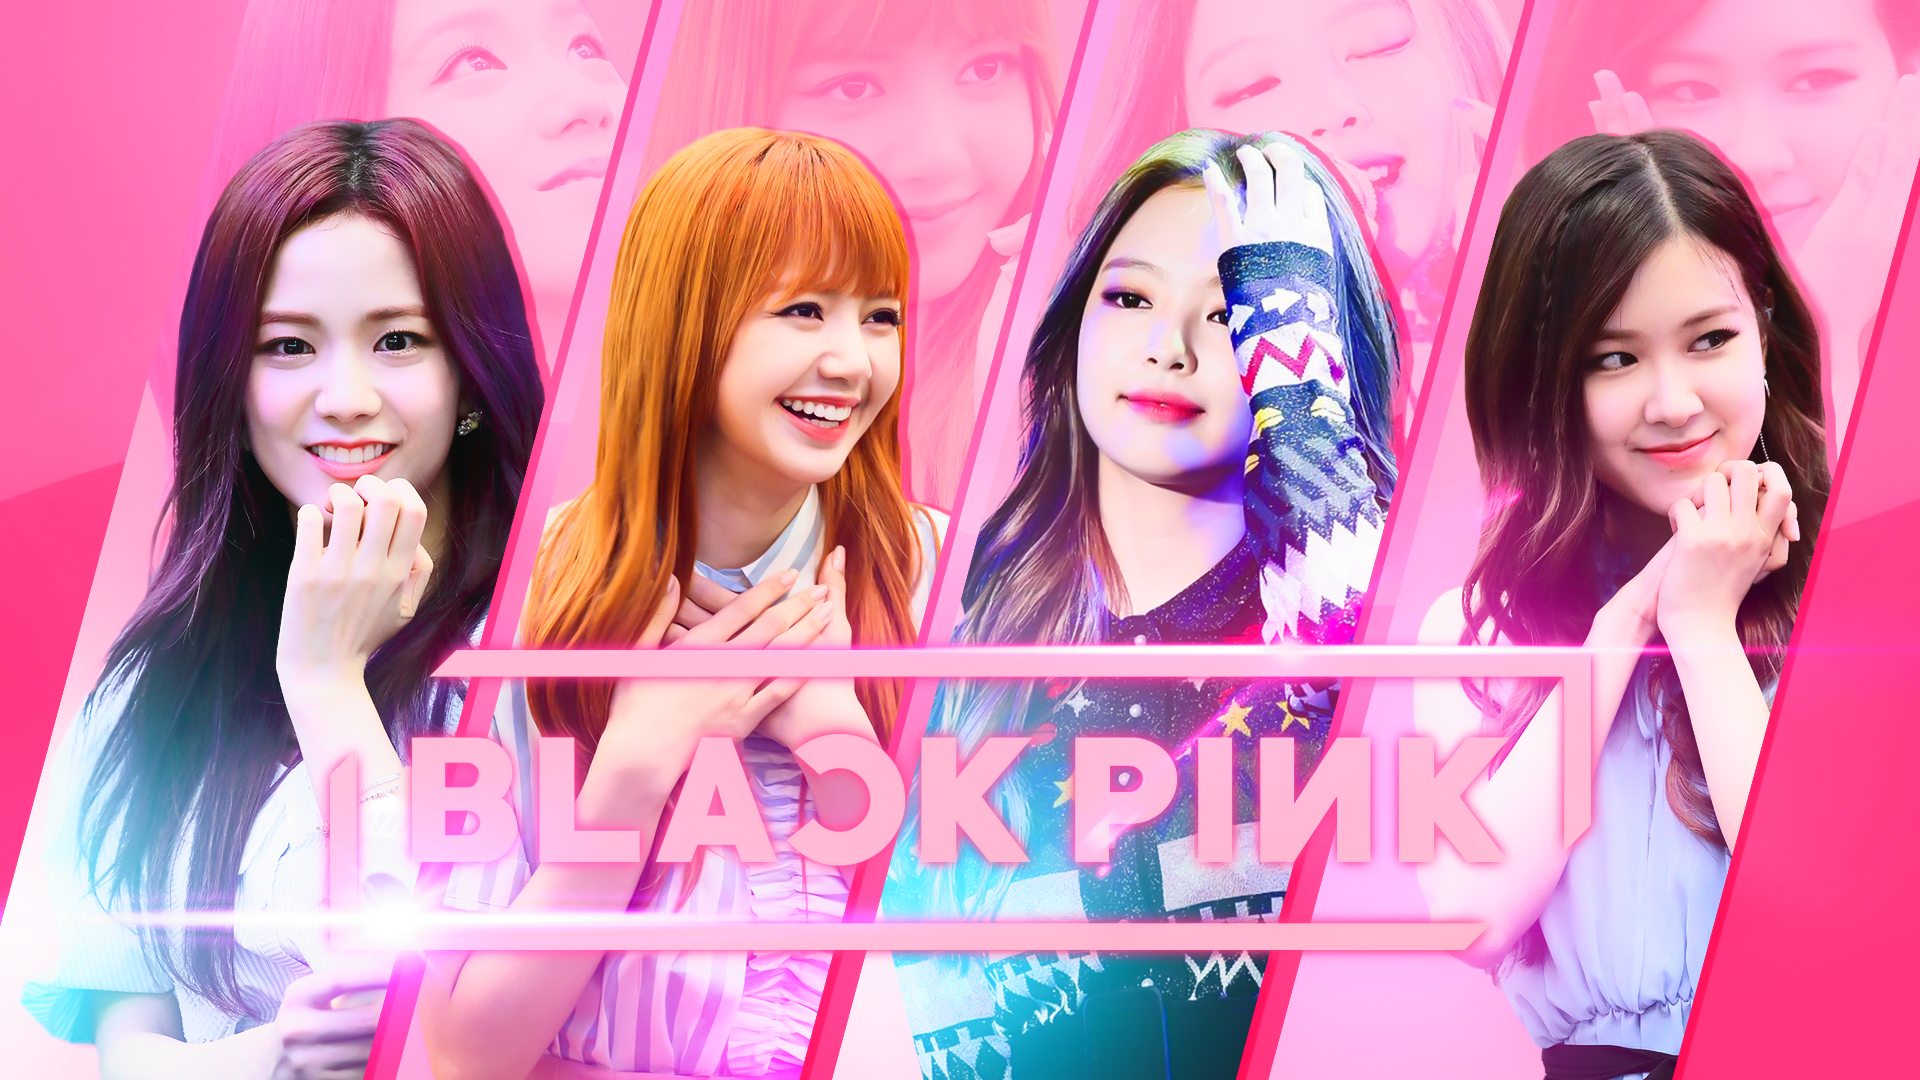 BLACKPINK 바탕화면 - Black 담홍색, 핑크 바탕화면 (43078211) - 팬팝